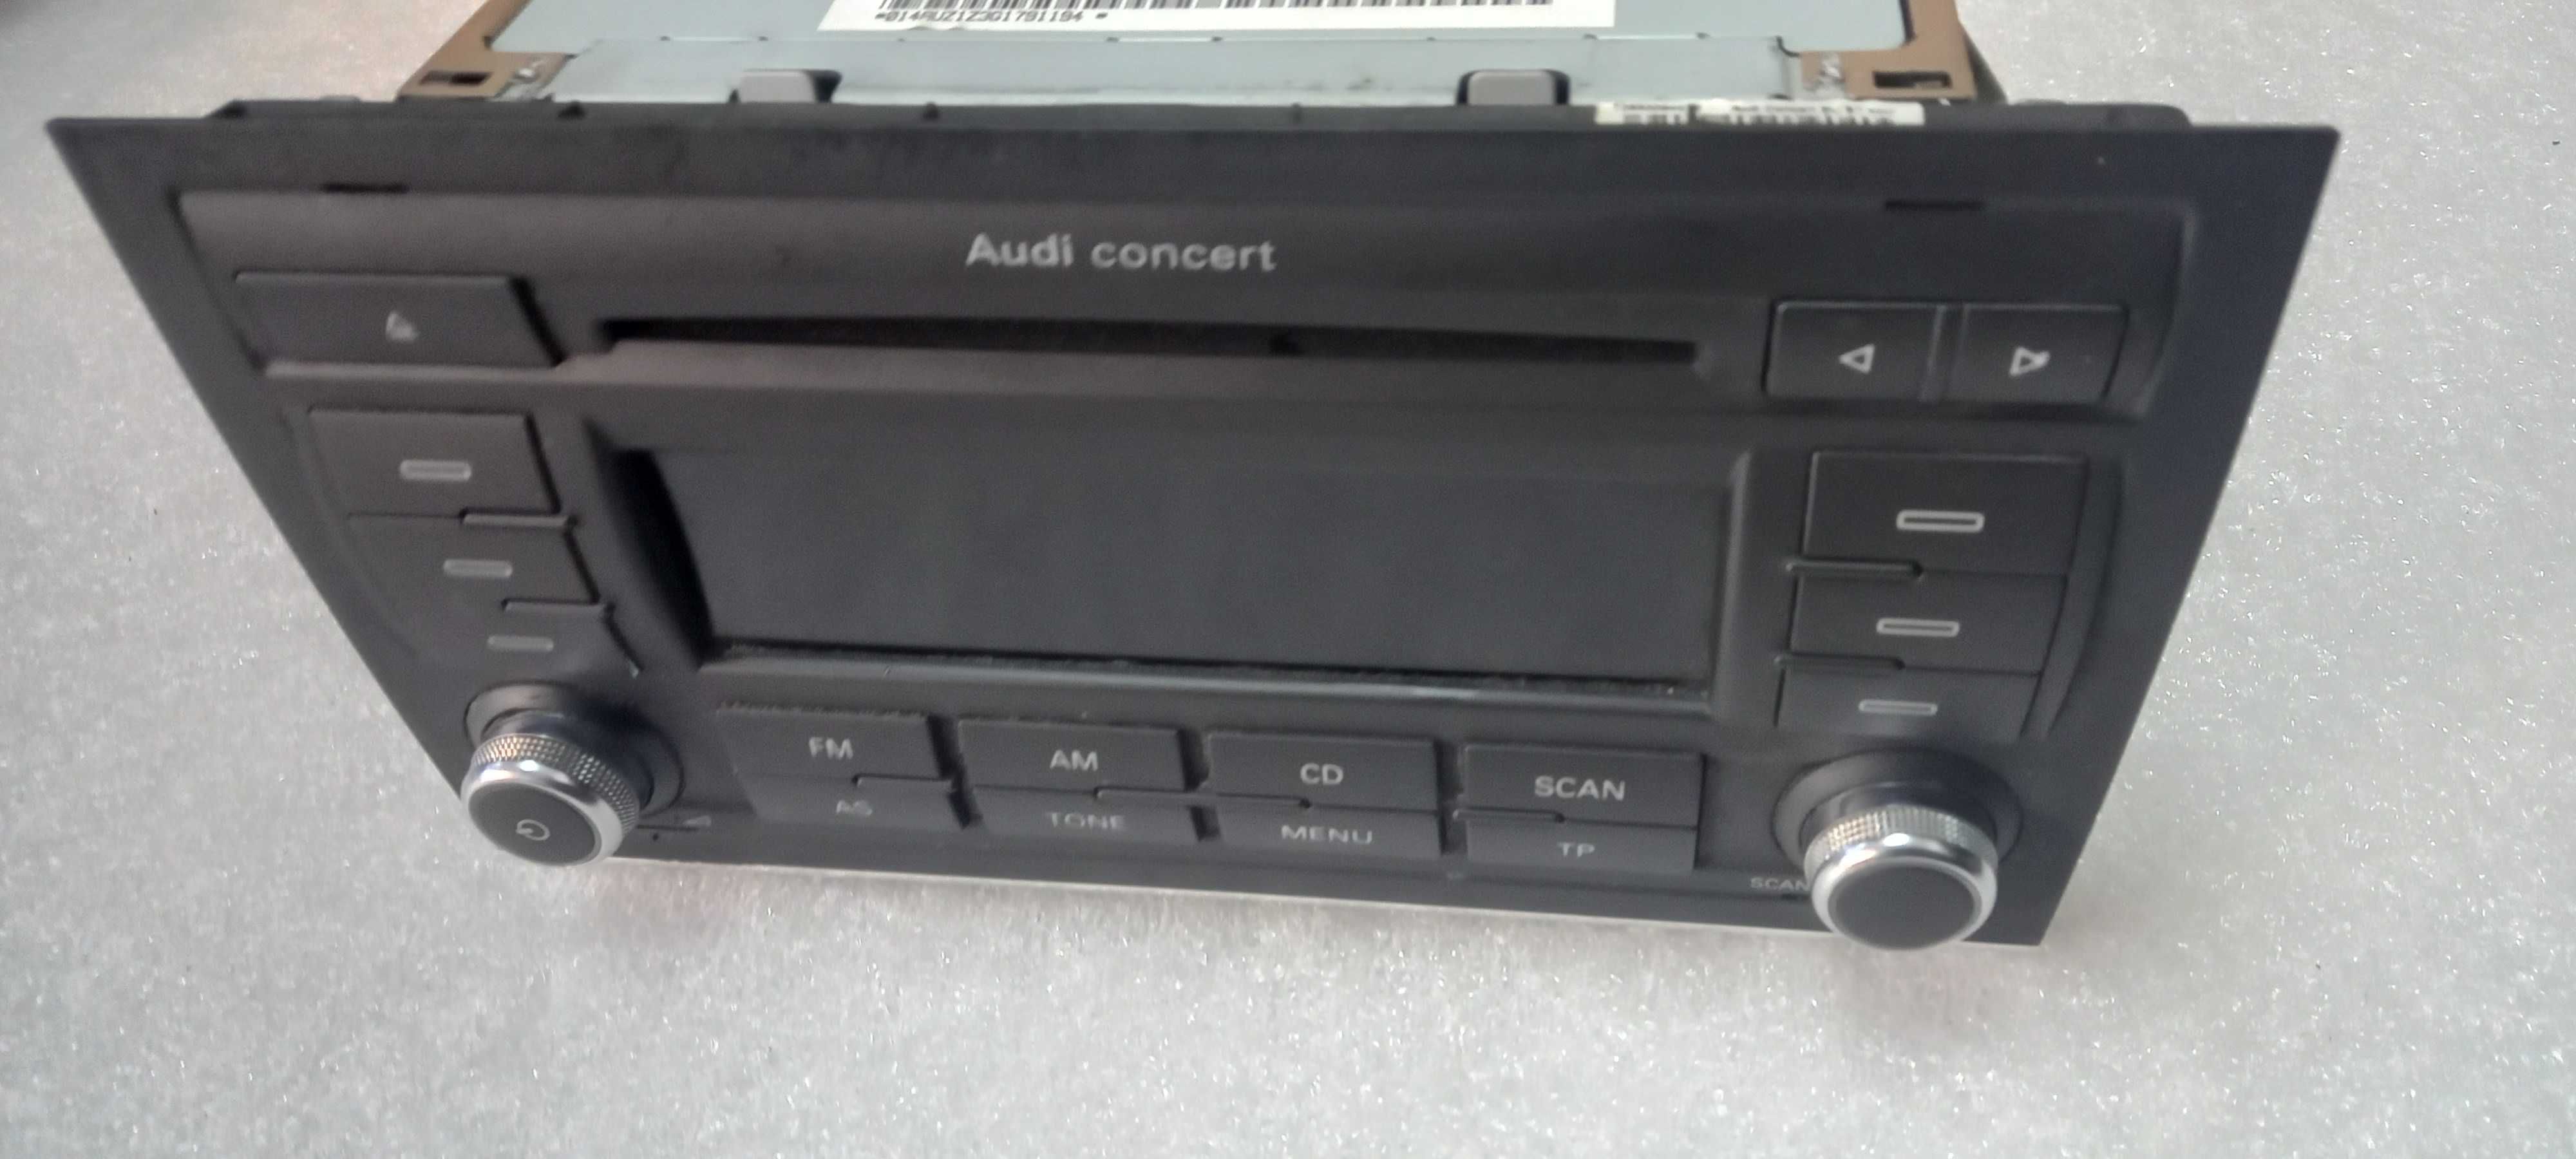 Radio Audi Concert Audi A4 B7 2 DIN -186AK